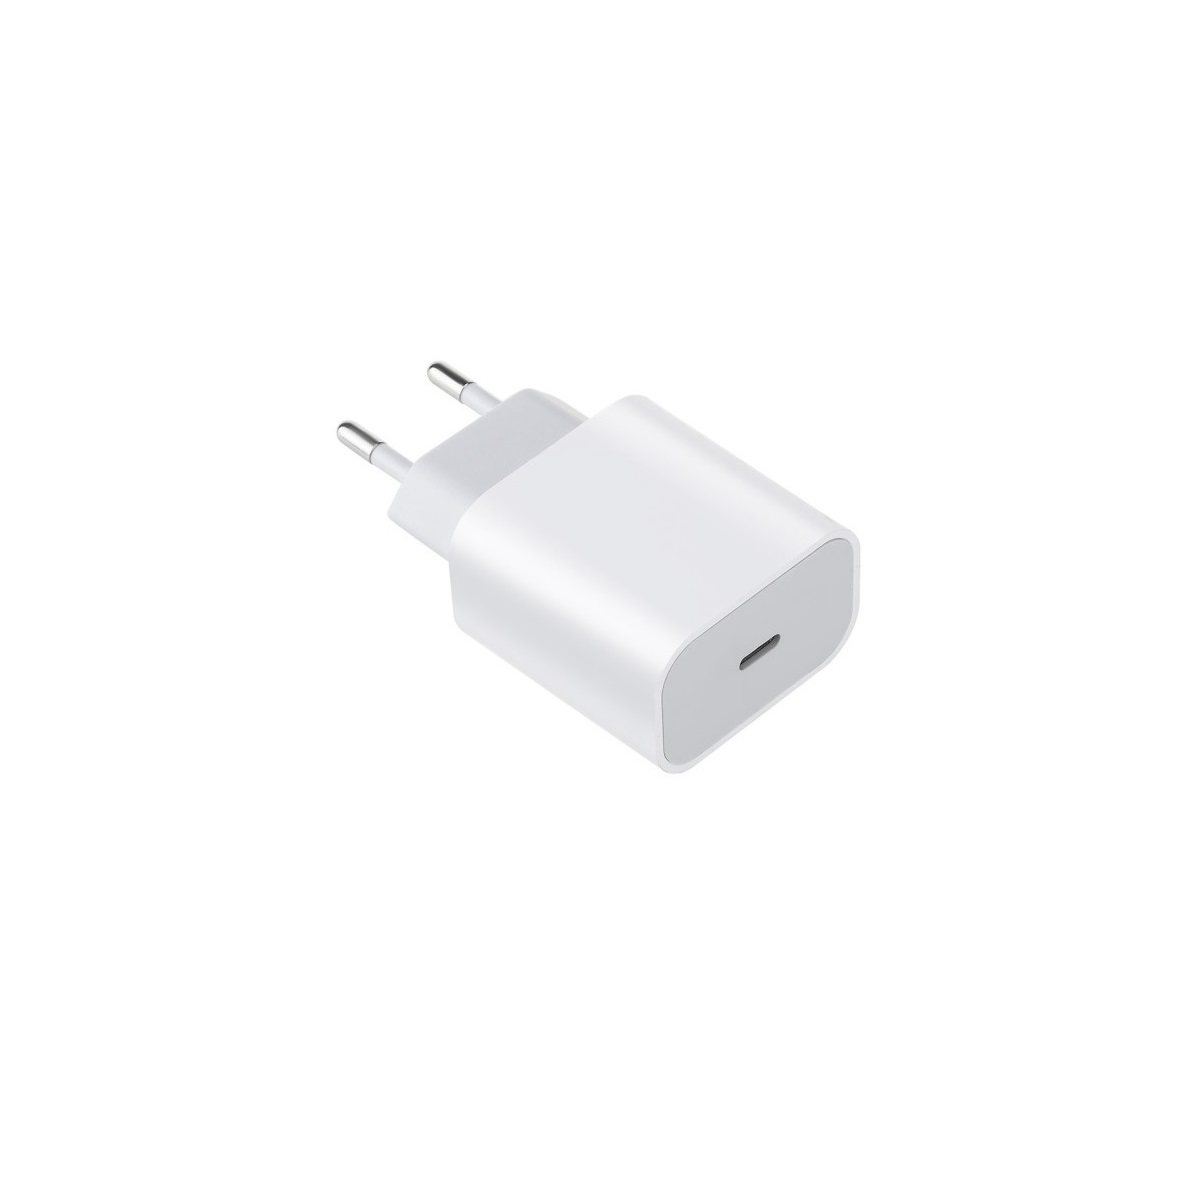 15 Pro Weiß USB 20W Plus Apple 15 15 Ladegerät Ladekabel 15 iPhone / Ladegerät Pro / VENTARENT für iPhone / Max C Netzteil Apple, iPad und